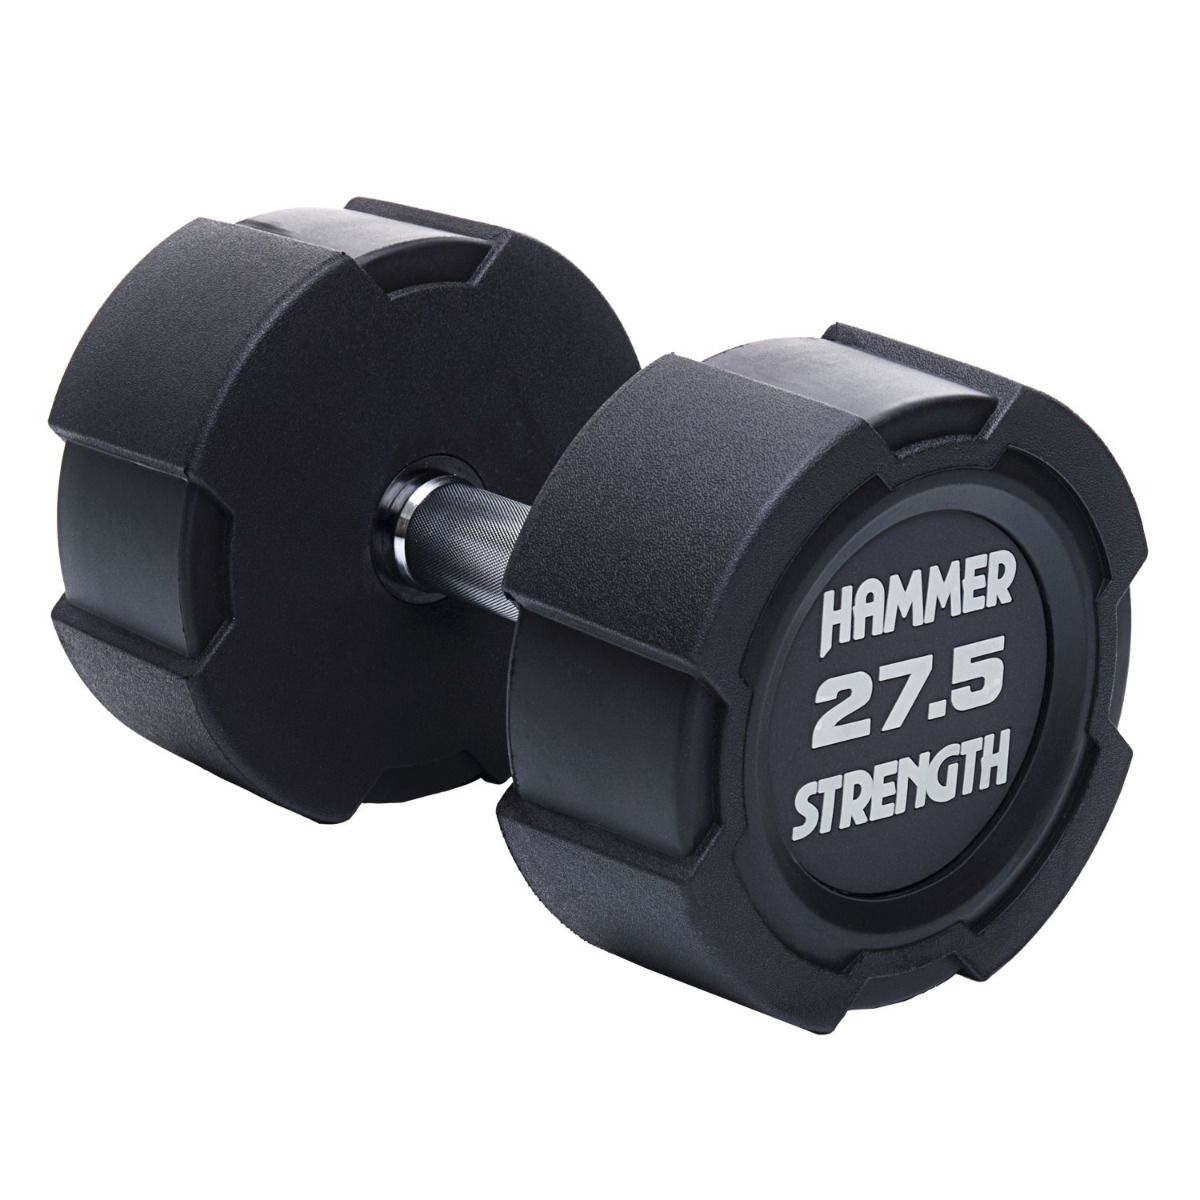 Hammer Strength Premium Rubber Dumbbells - Pairs